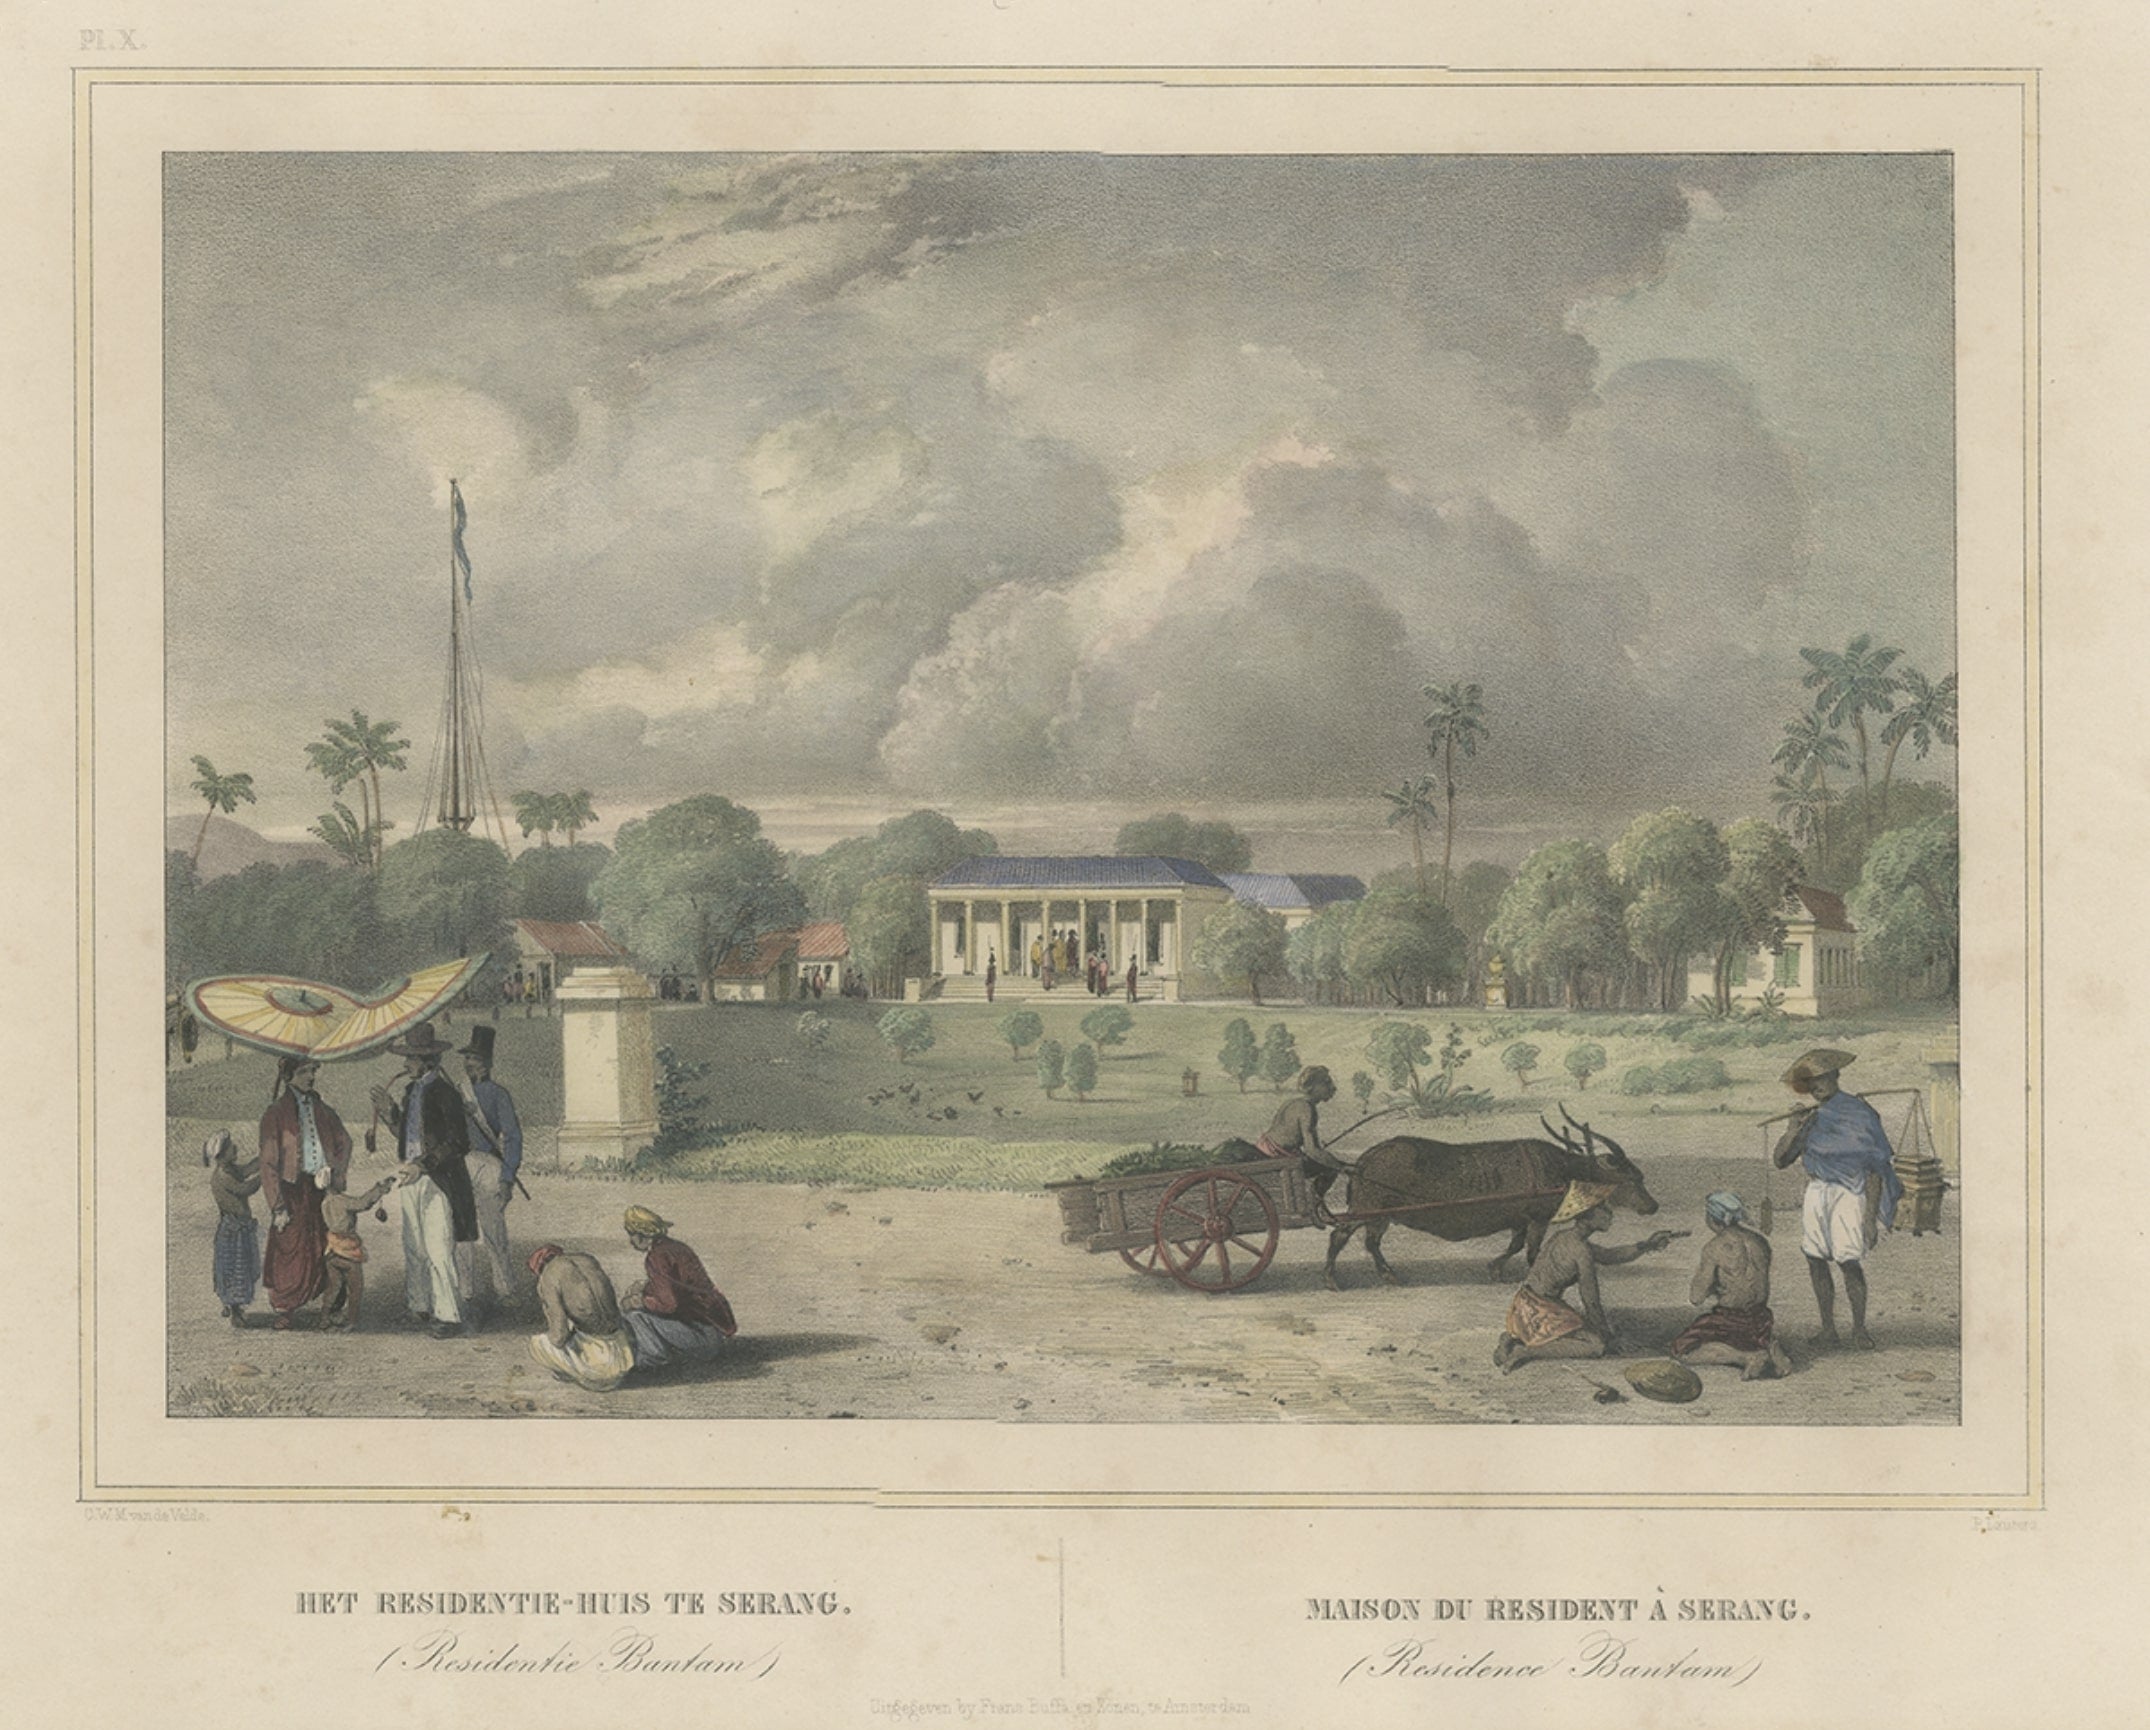 Antiker Druck des Residenzhauses in Serang, Java, Indonesien, 1844 im Angebot